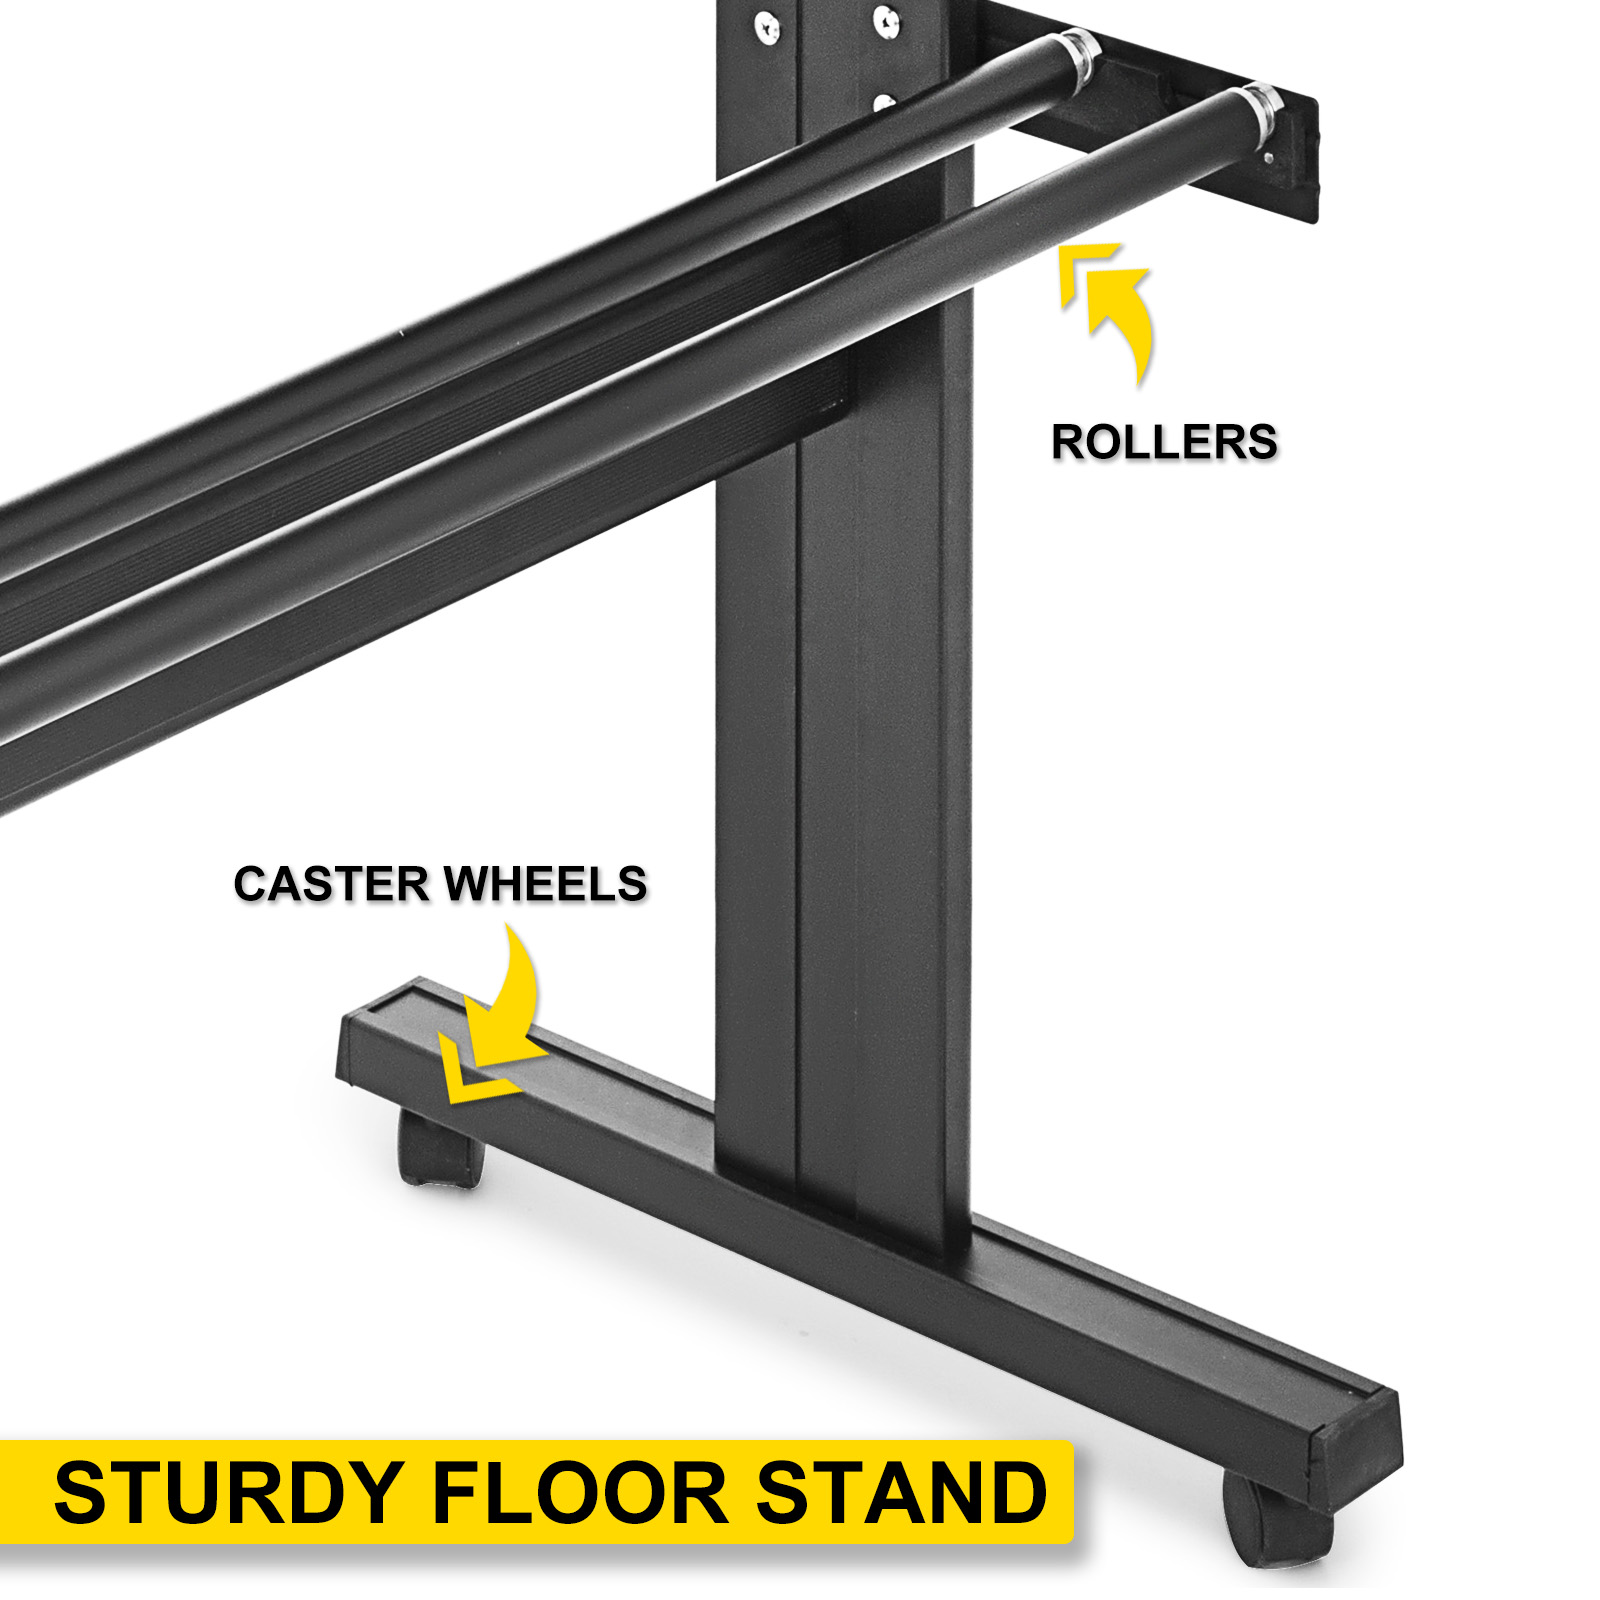 Stand-Up Floor Cutter